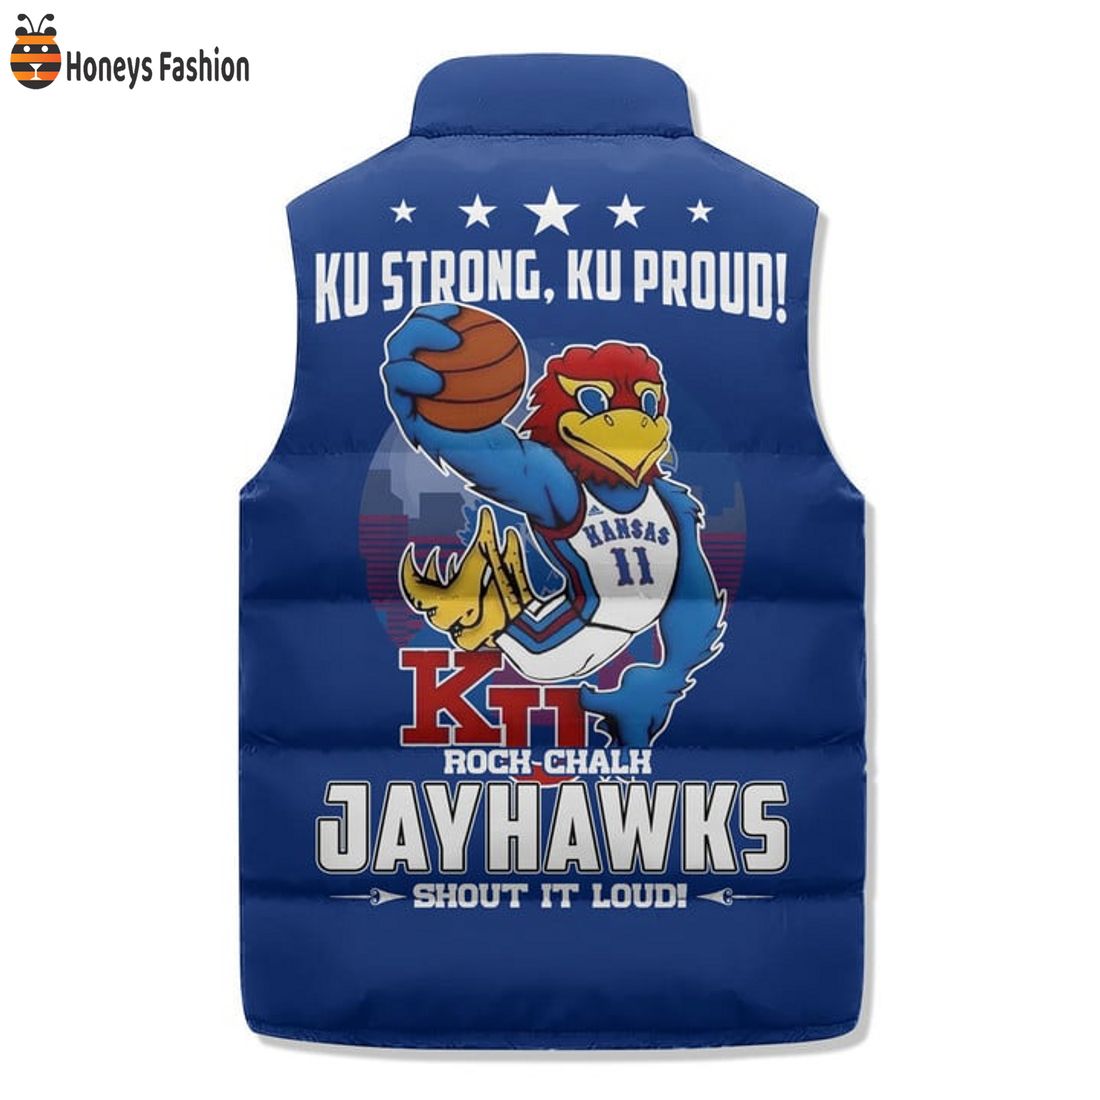 TRENDING Kansas Jayhawks Rock Chalk Ku Strong Ku Proud Puffer Sleeveless Jacket